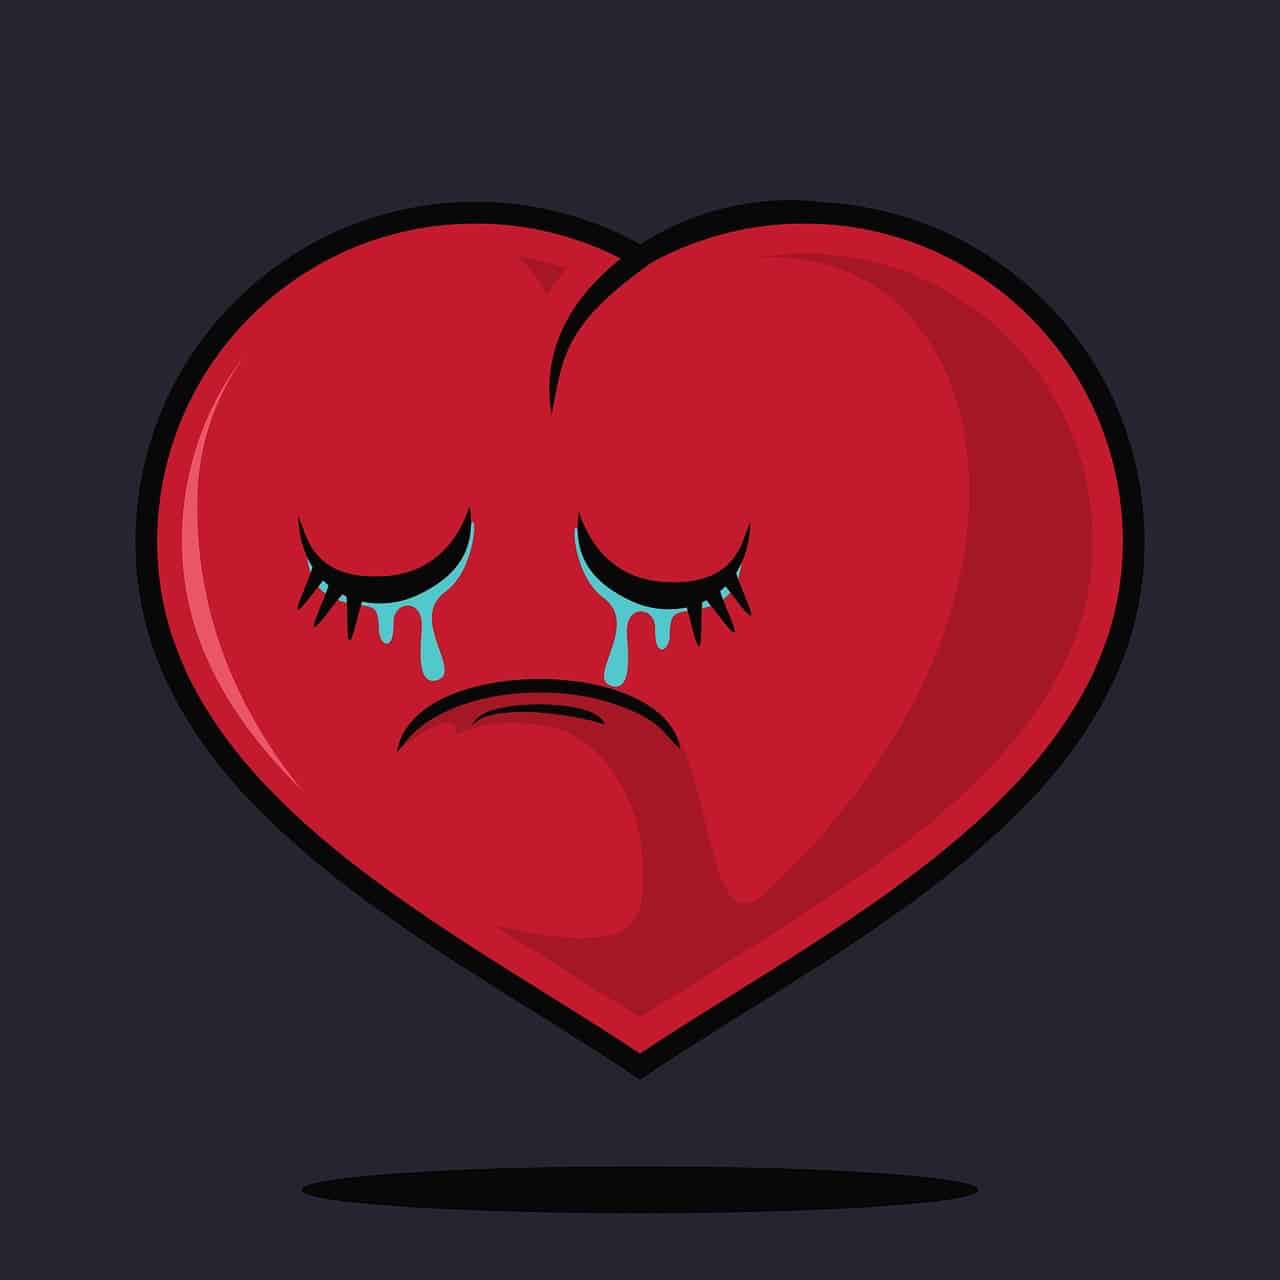 50+] Broken Heart DP for Whatsapp & Instagram (HD)